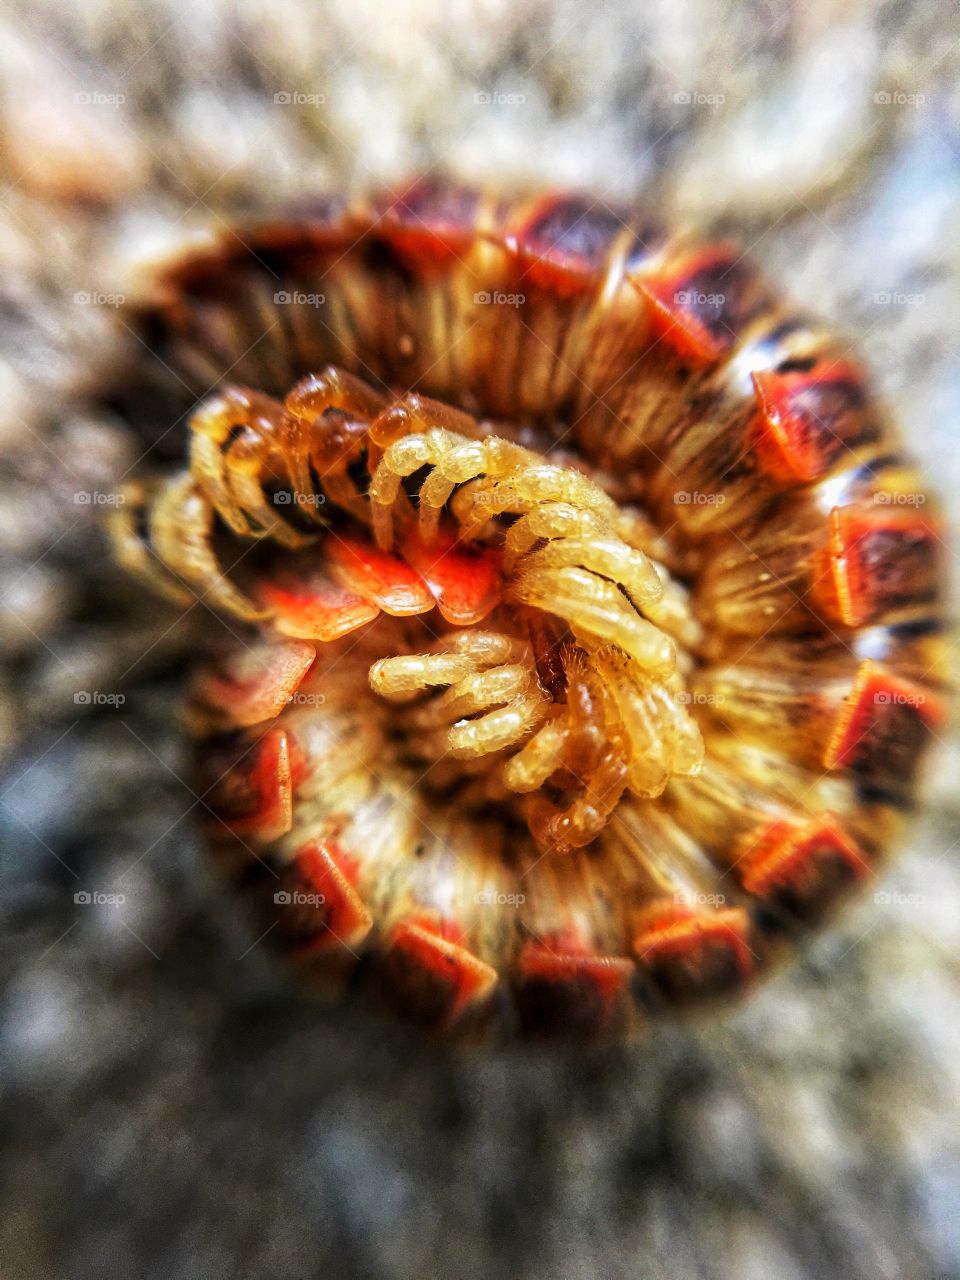 Curled up centipede. Extreme Closeup.